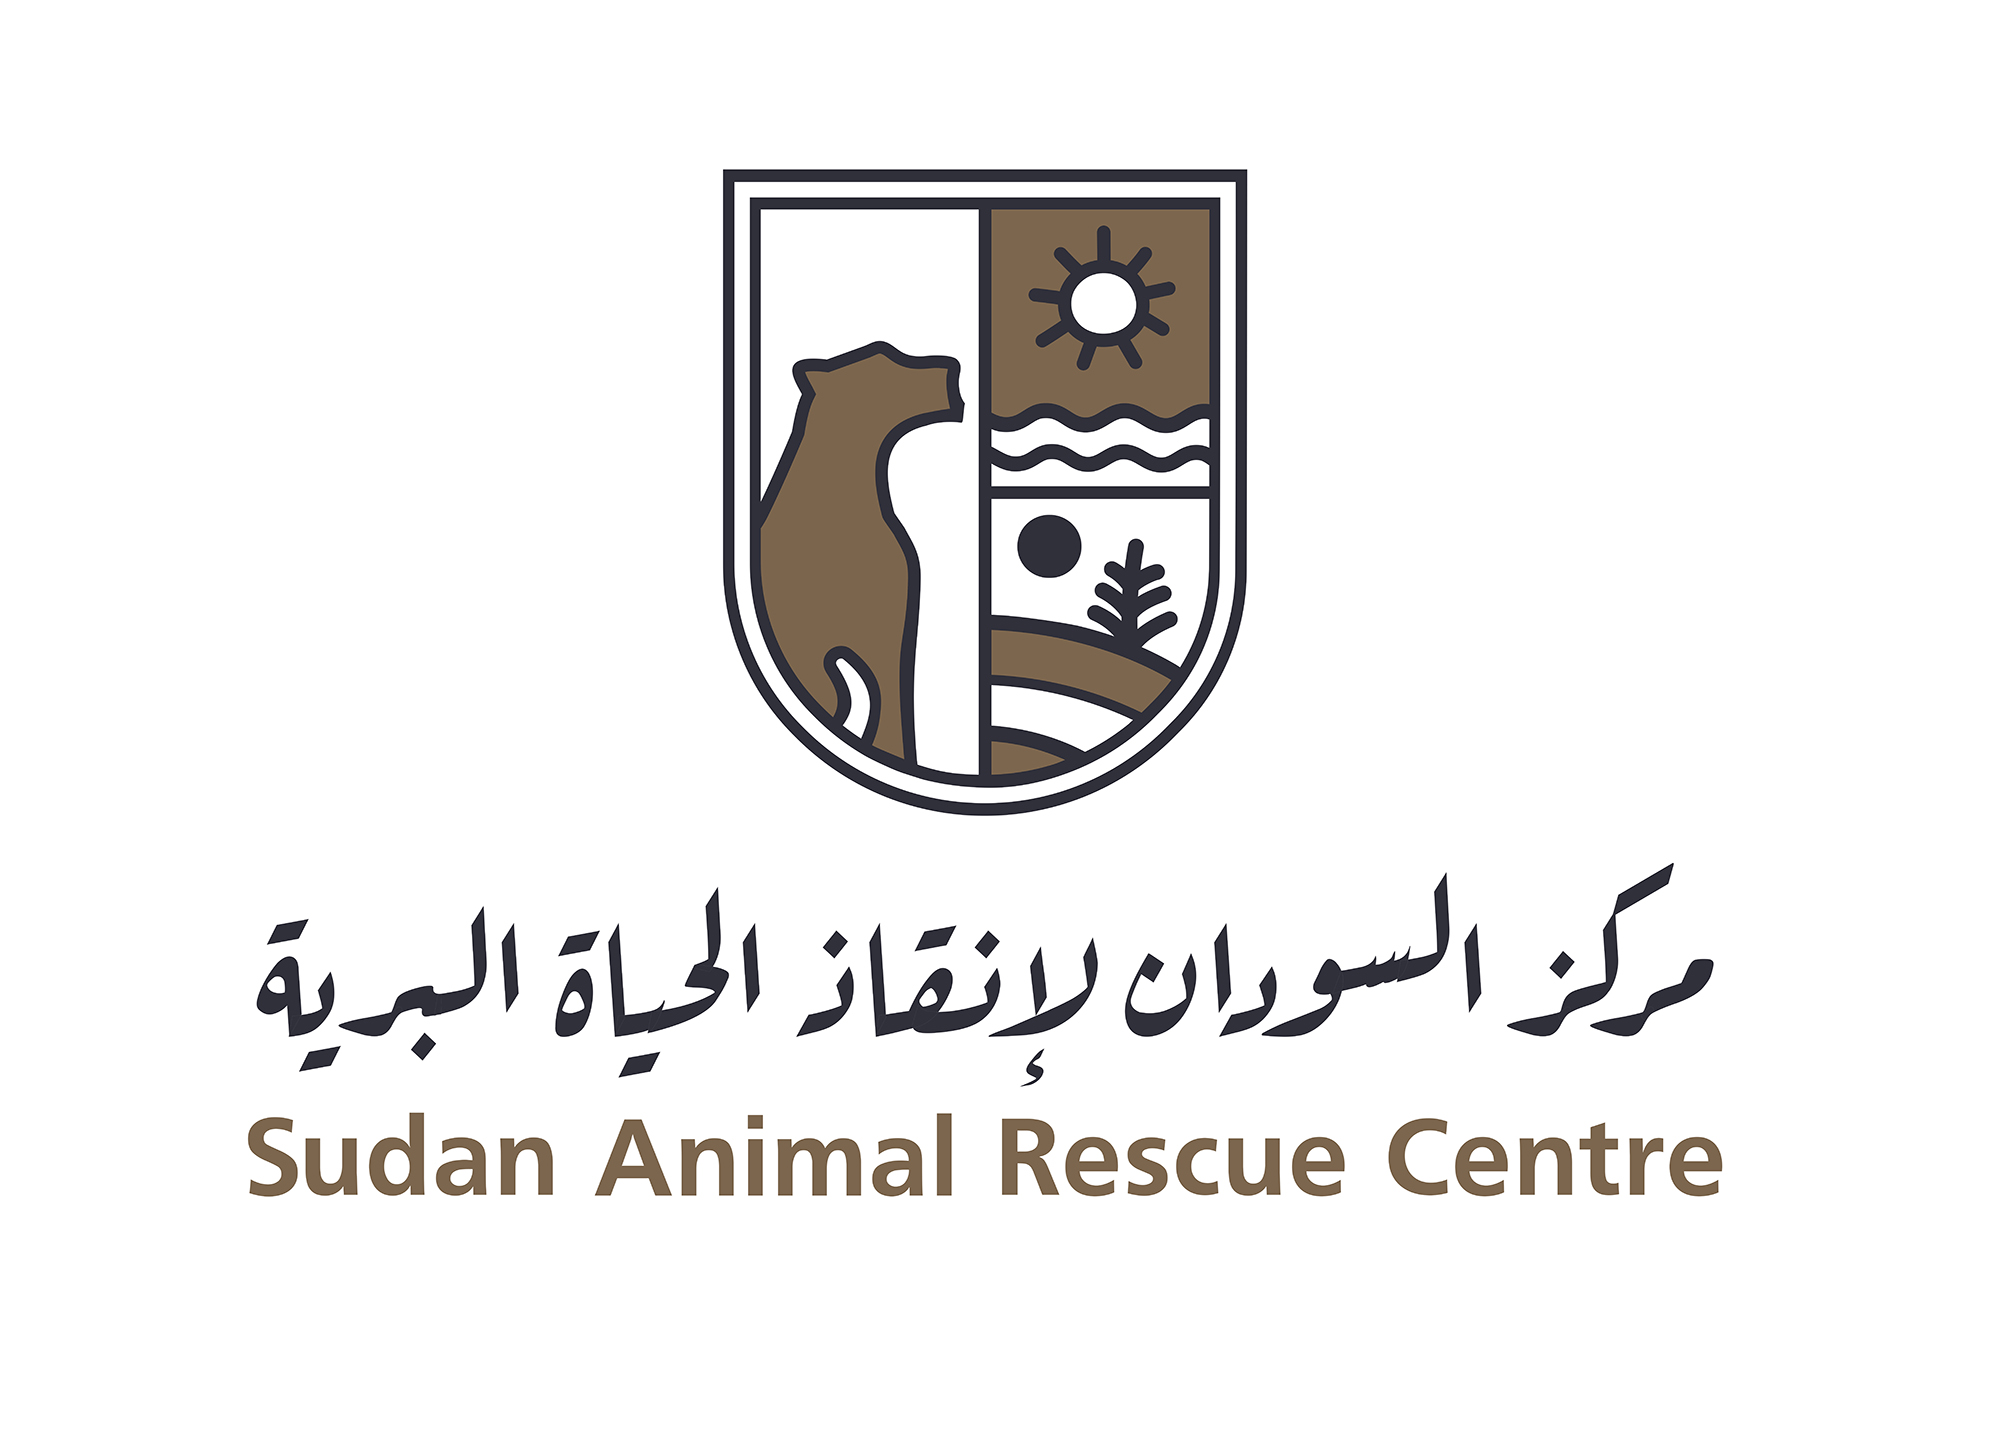 Sudan Animal Rescue